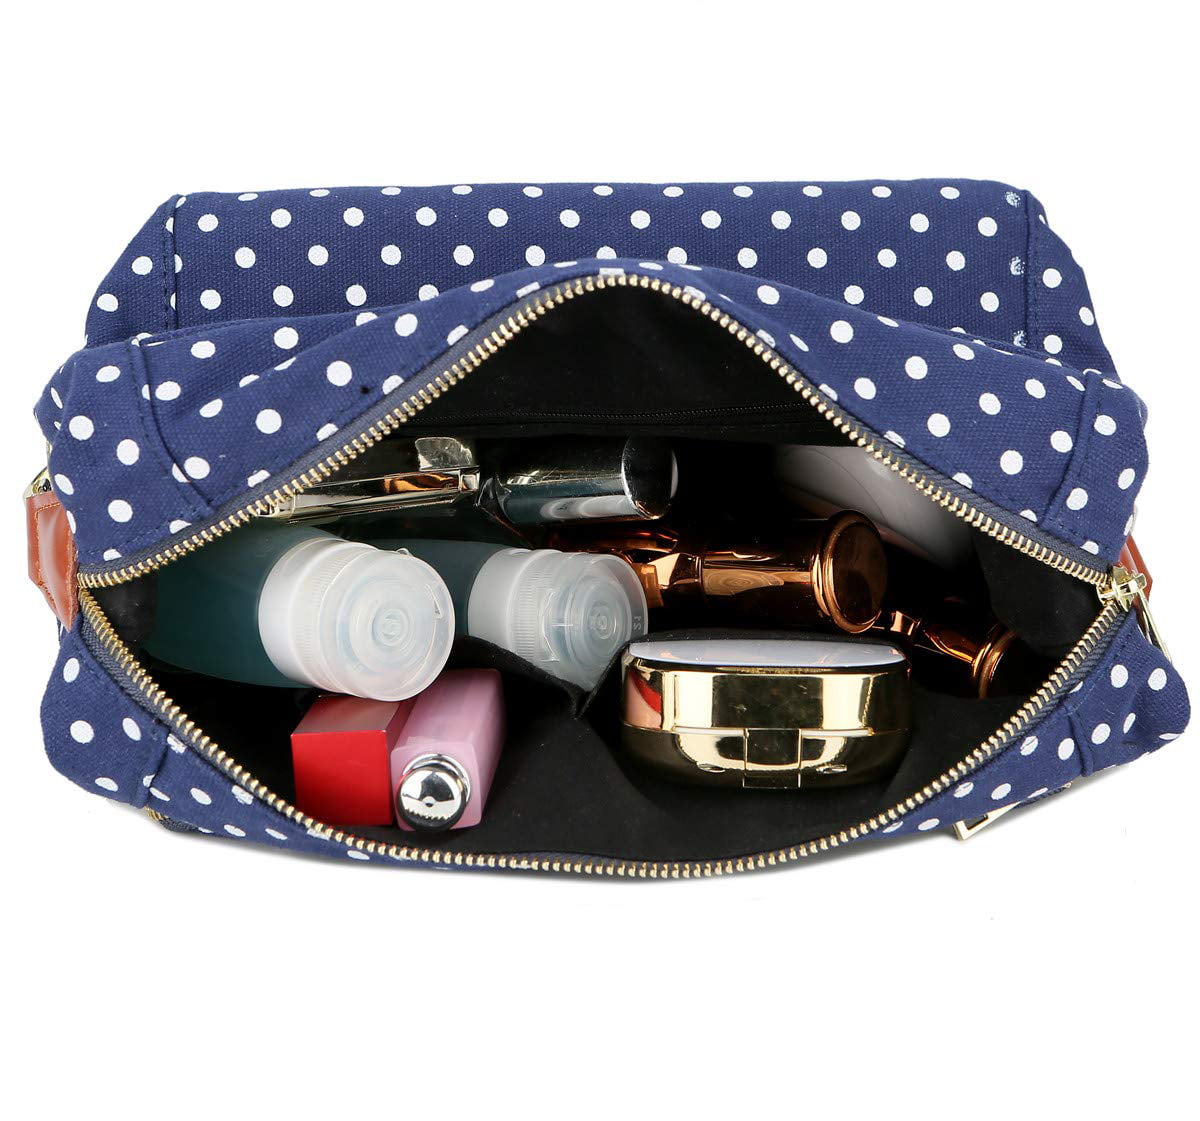 Blue BAOSHA XS-04 Canvas Travel Toiletry Bag Shaving Dopp Case Kit for Women and ladies